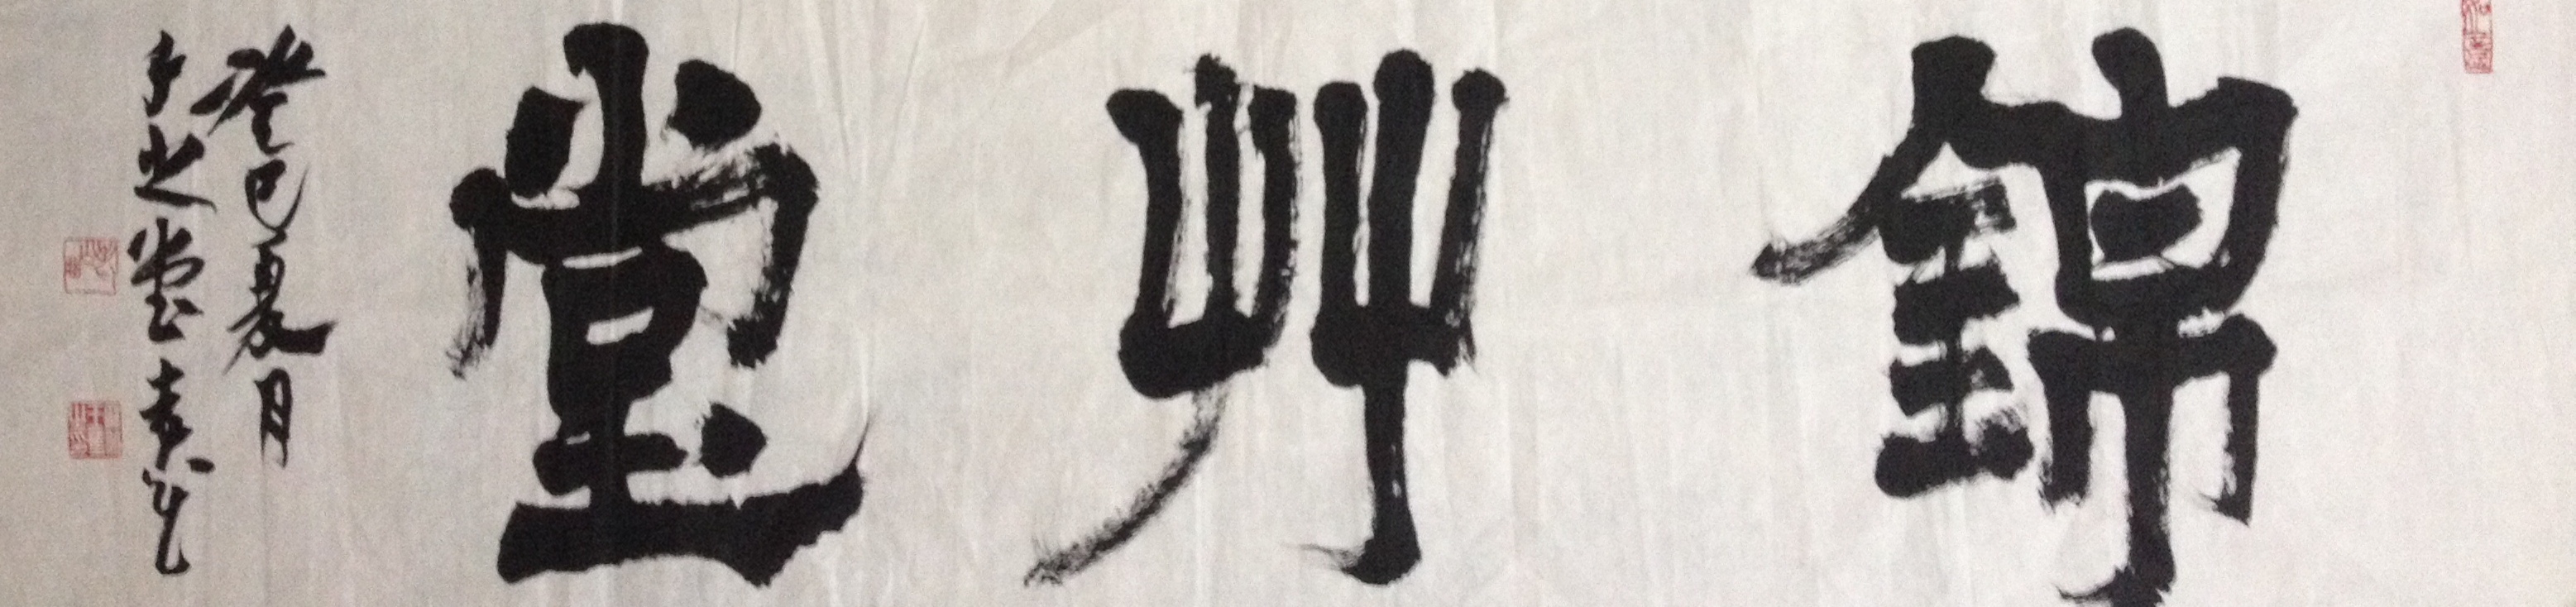 锦山书画logo